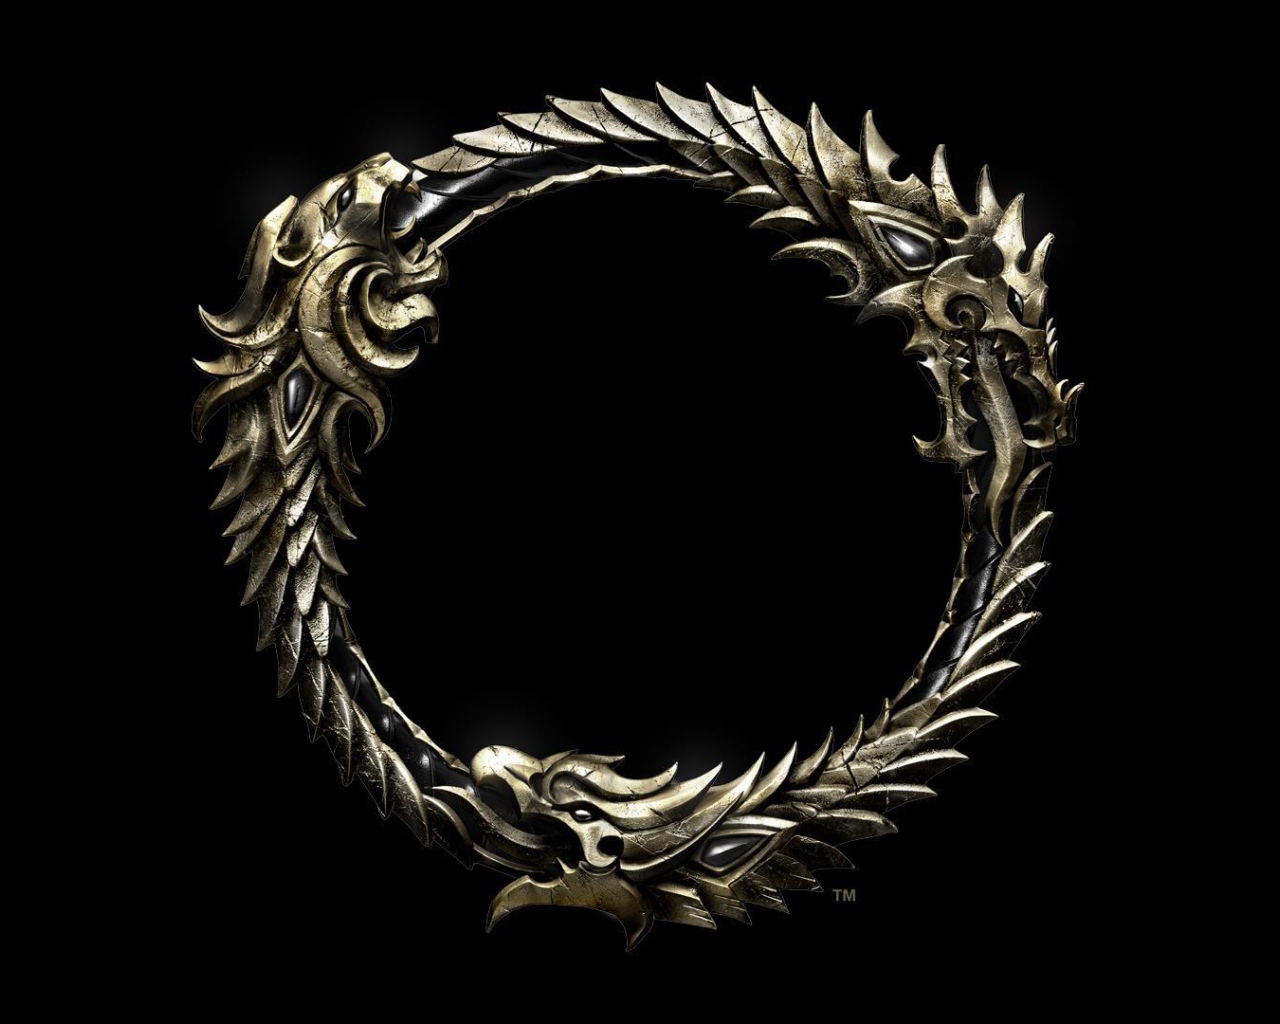 Elder Scrolls Online: the dragon sign